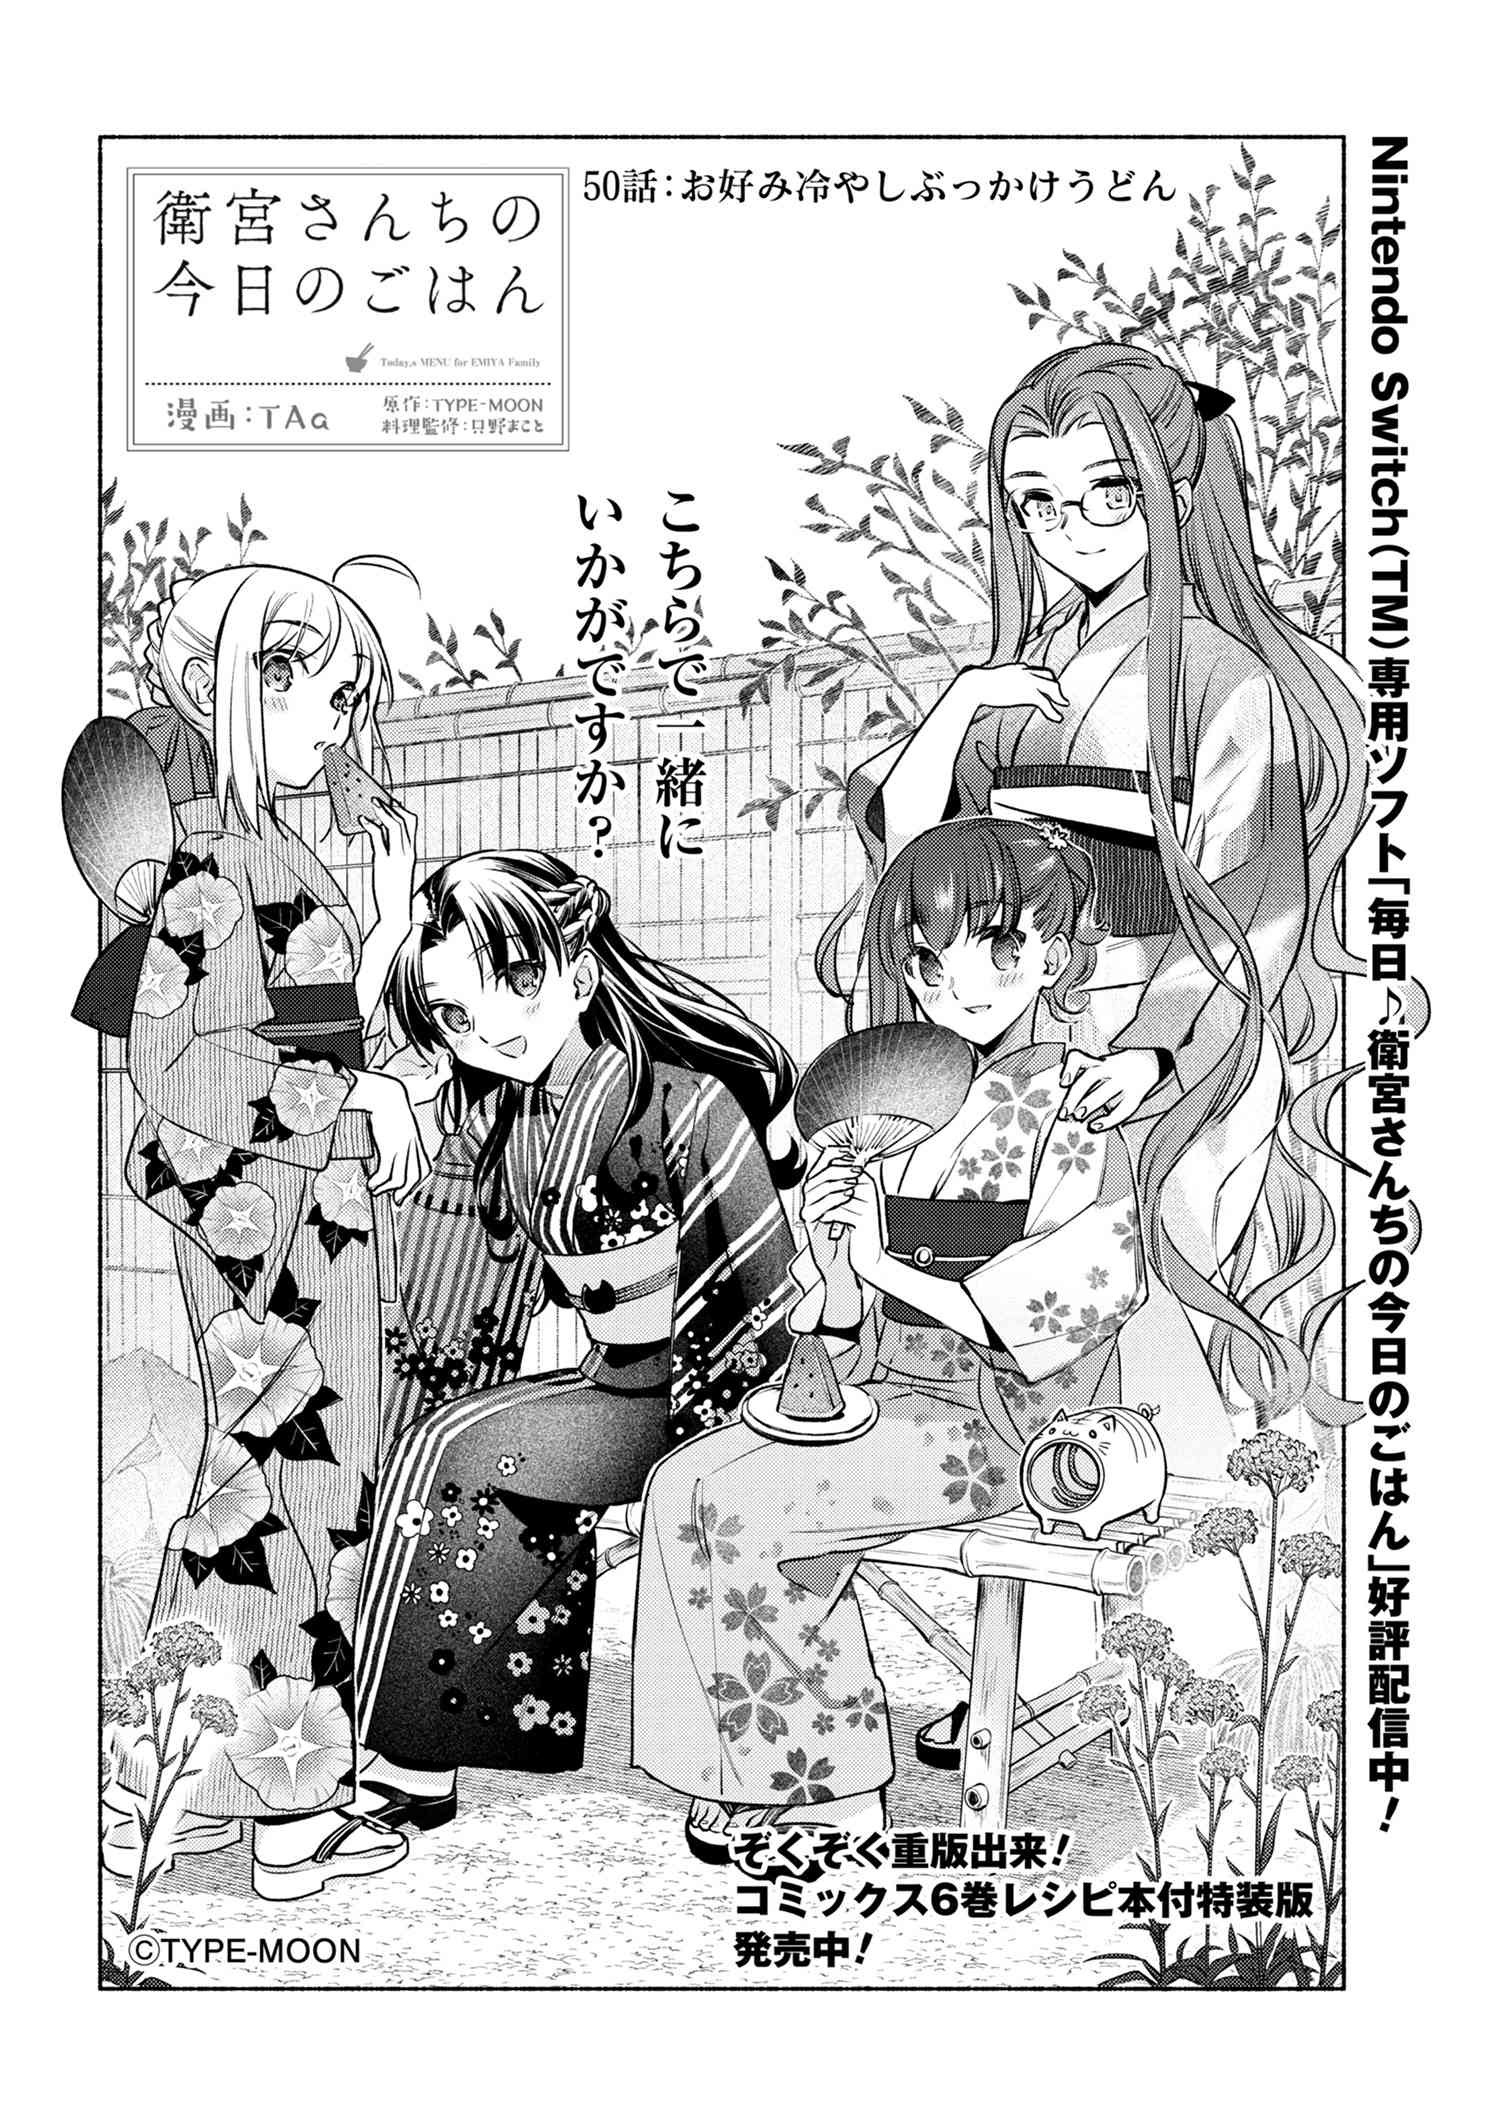 Emiya-san Chi no Kyou no Gohan - Chapter 50 - Page 2